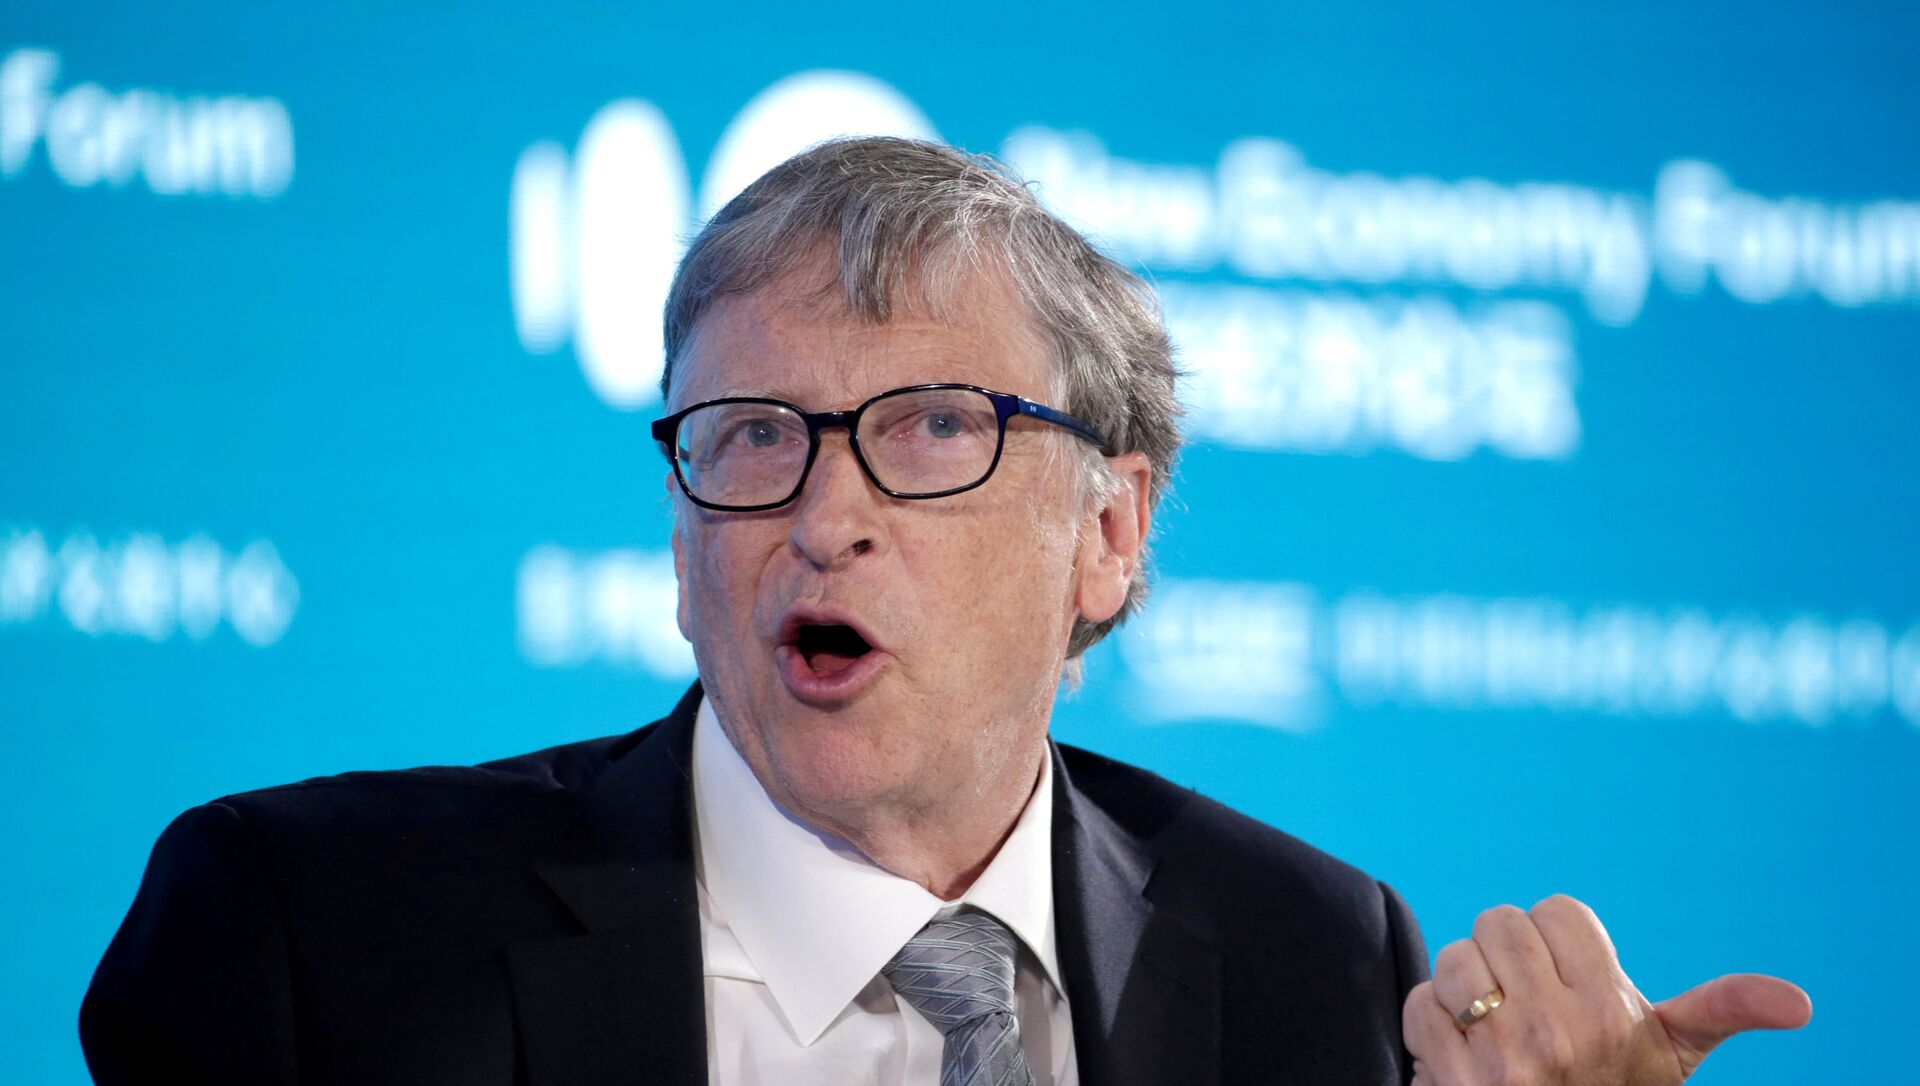 Bill Gates, Co-Chair of Bill & Melinda Gates Foundation, attends a conversation at the 2019 New Economy Forum in Beijing, China November 21, 2019 - Sputnik International, 1920, 11.02.2021